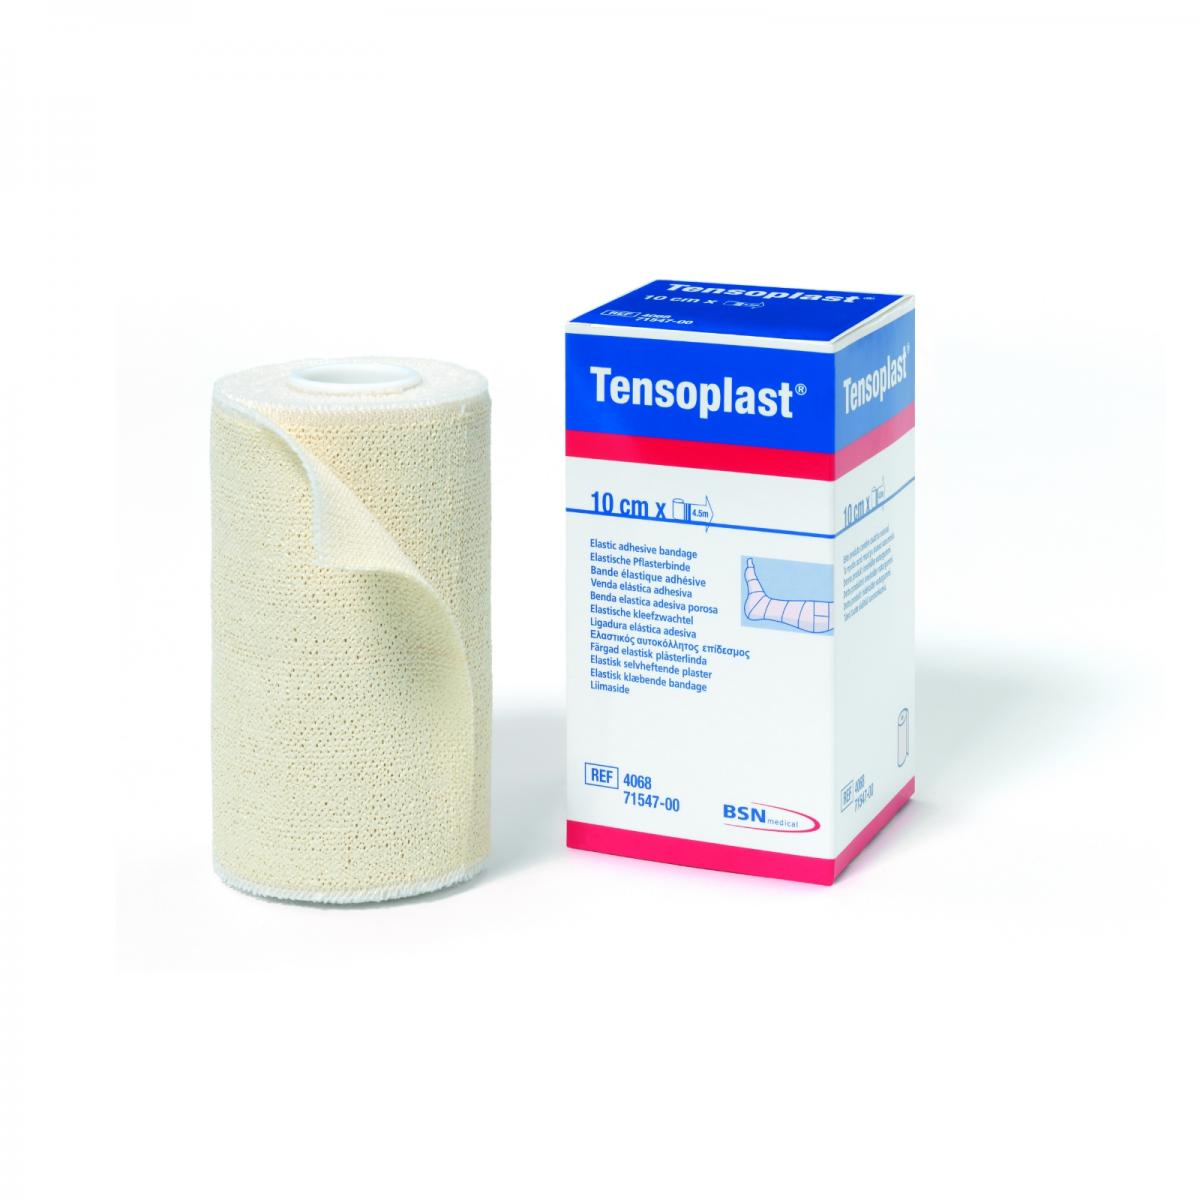 Tensoplast - www.gulare.com